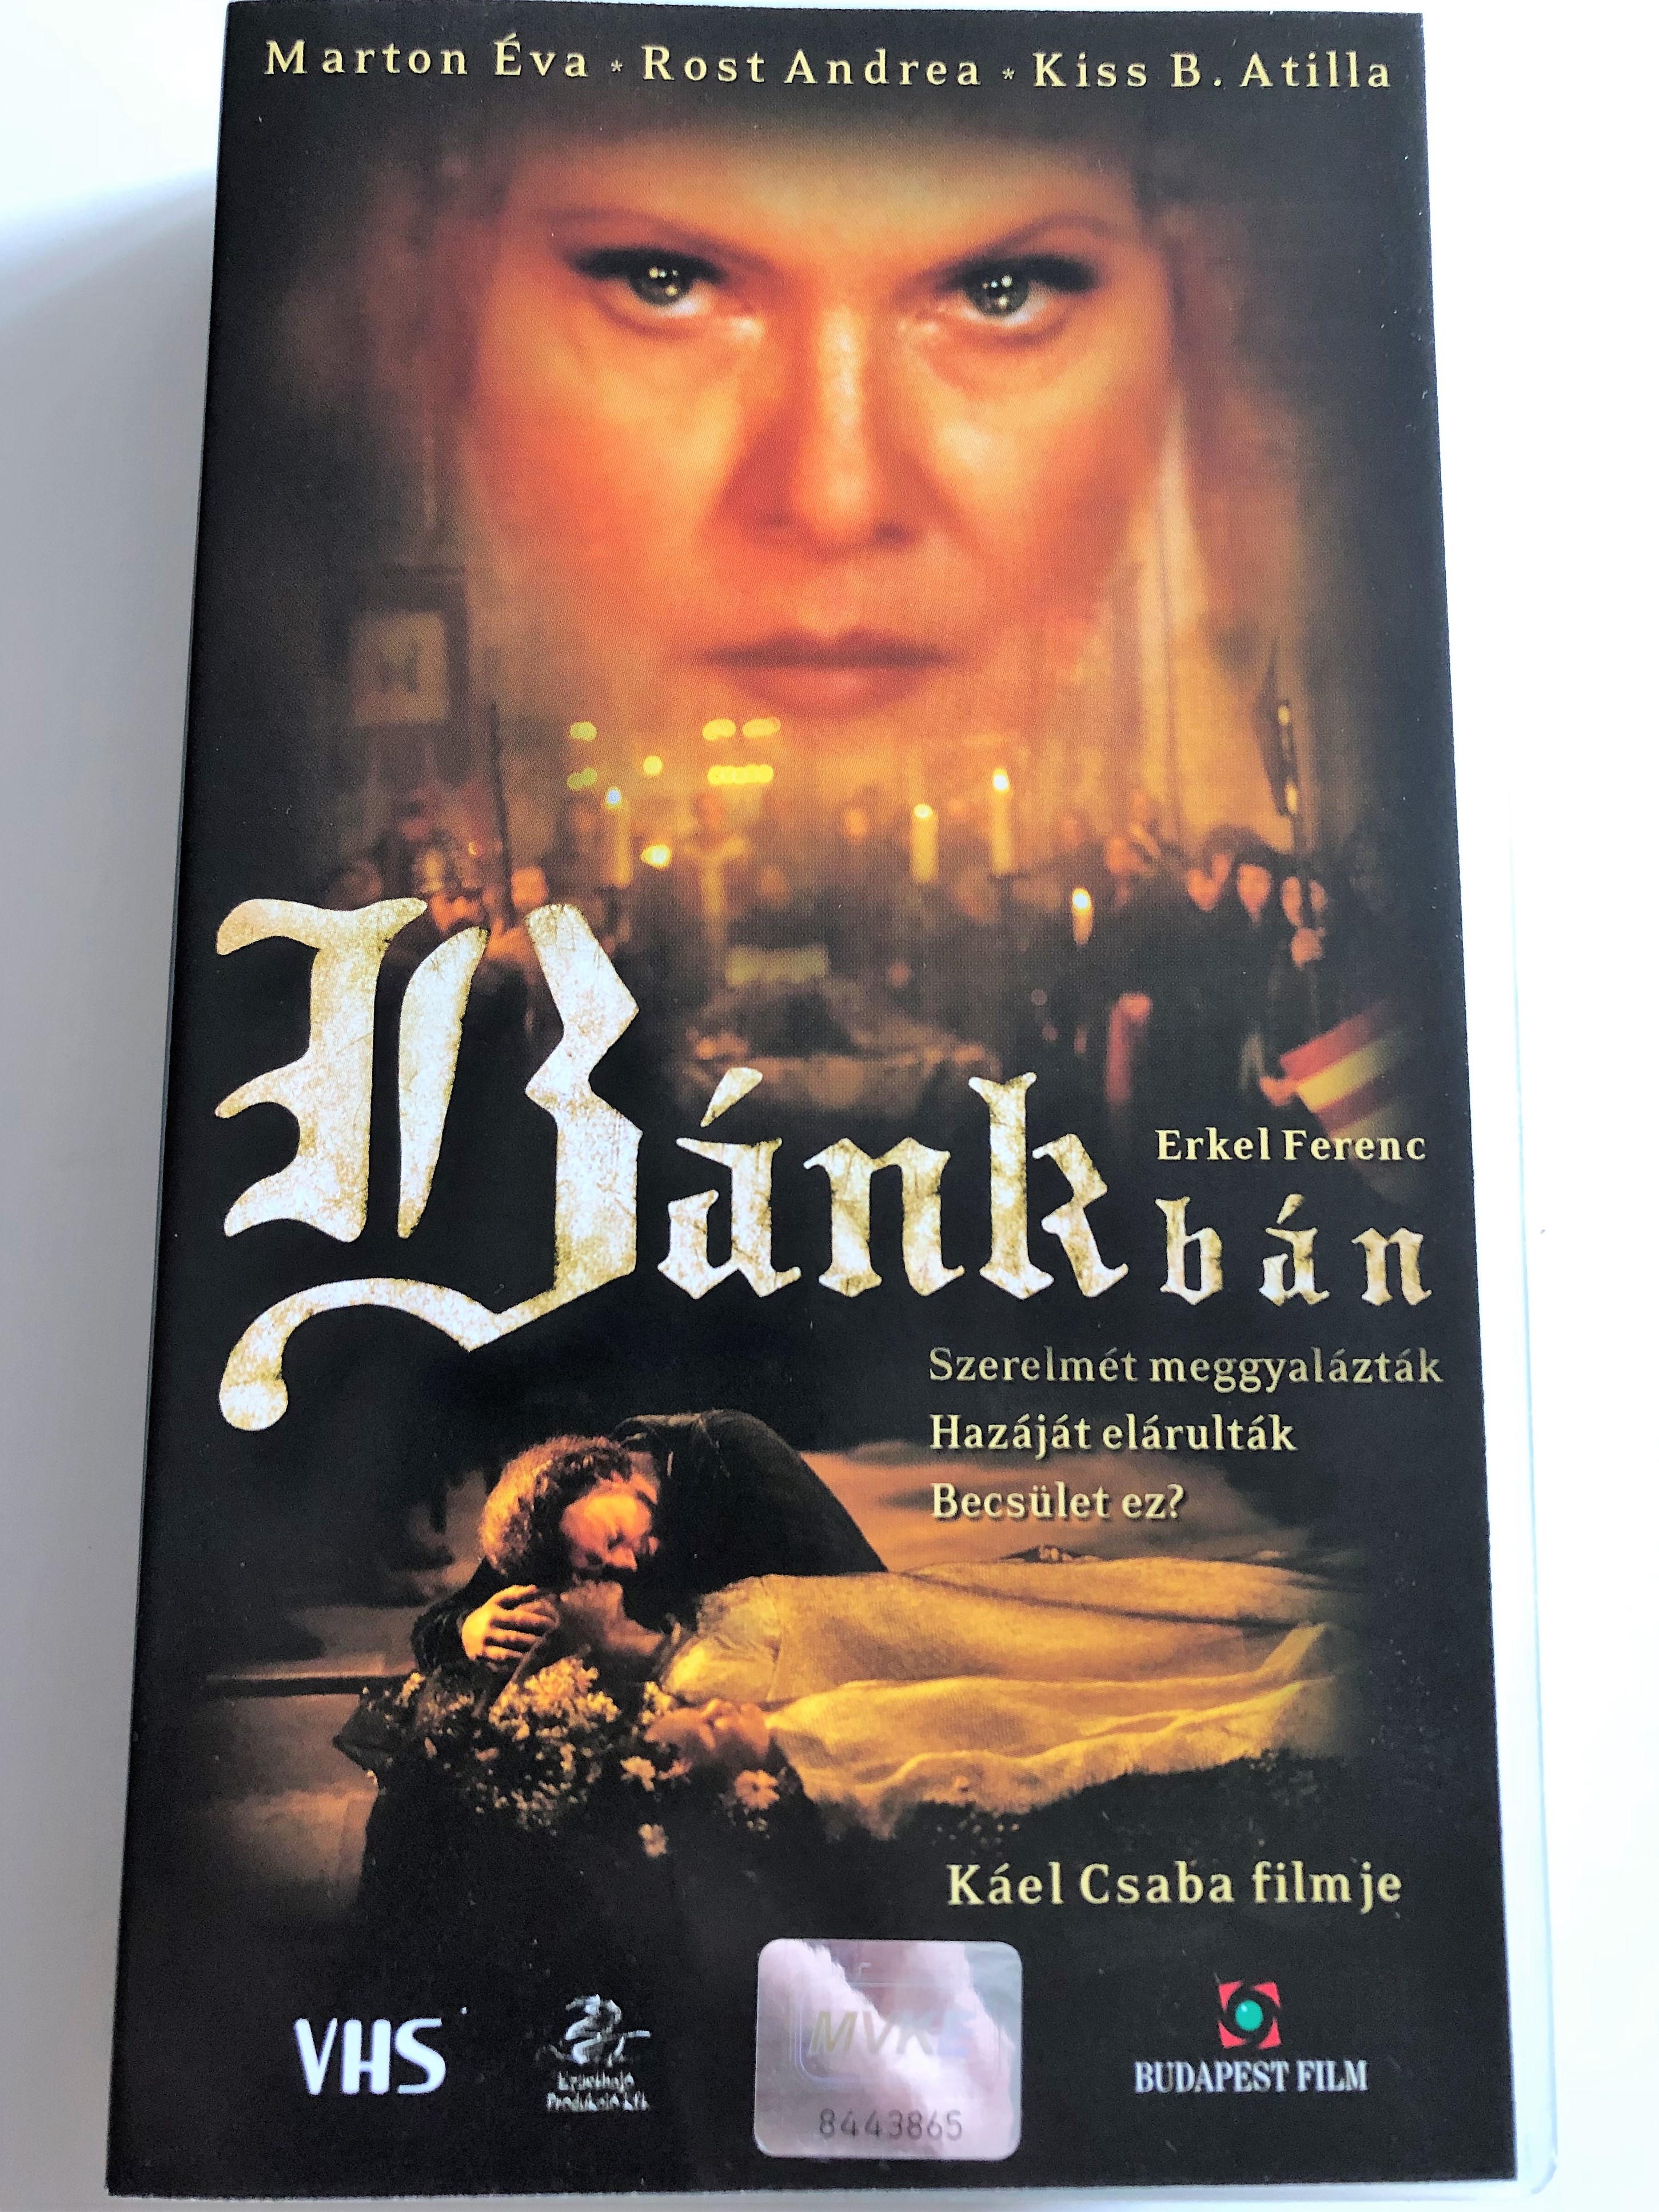 b-nk-b-n-vhs-2002-directed-by-k-el-csaba-starring-marton-va-rost-andrea-kiss-b.-attila-written-by-erkel-ferenc-hungarian-opera-film-1-.jpg